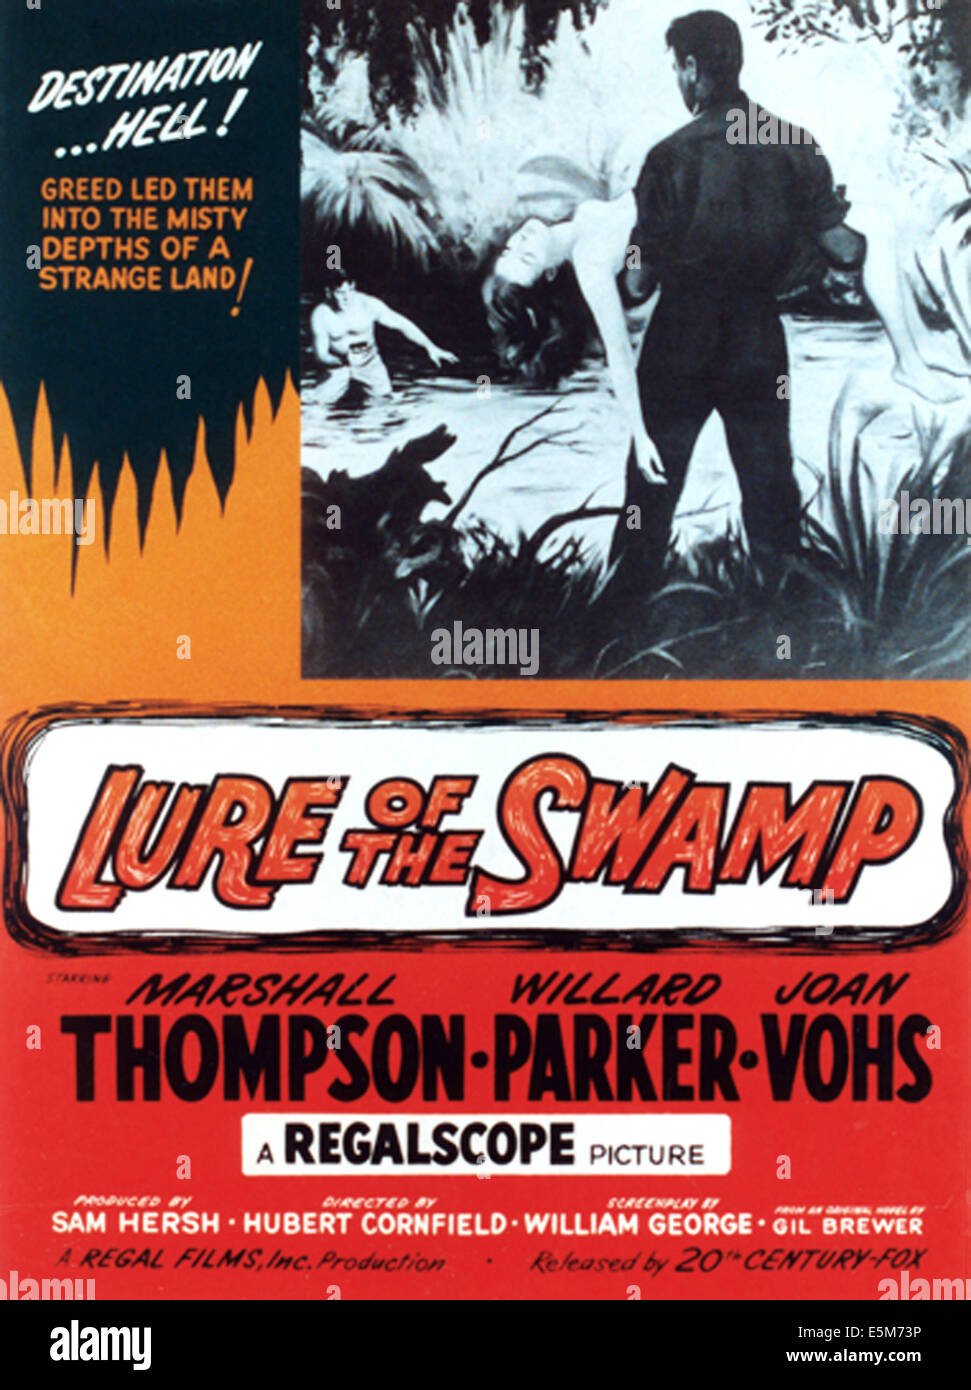 LURE THE SWAMP, 1957, TM & Copyright © 20th Century Fox Film Corp./Courtesy Everett Collection Stockfoto